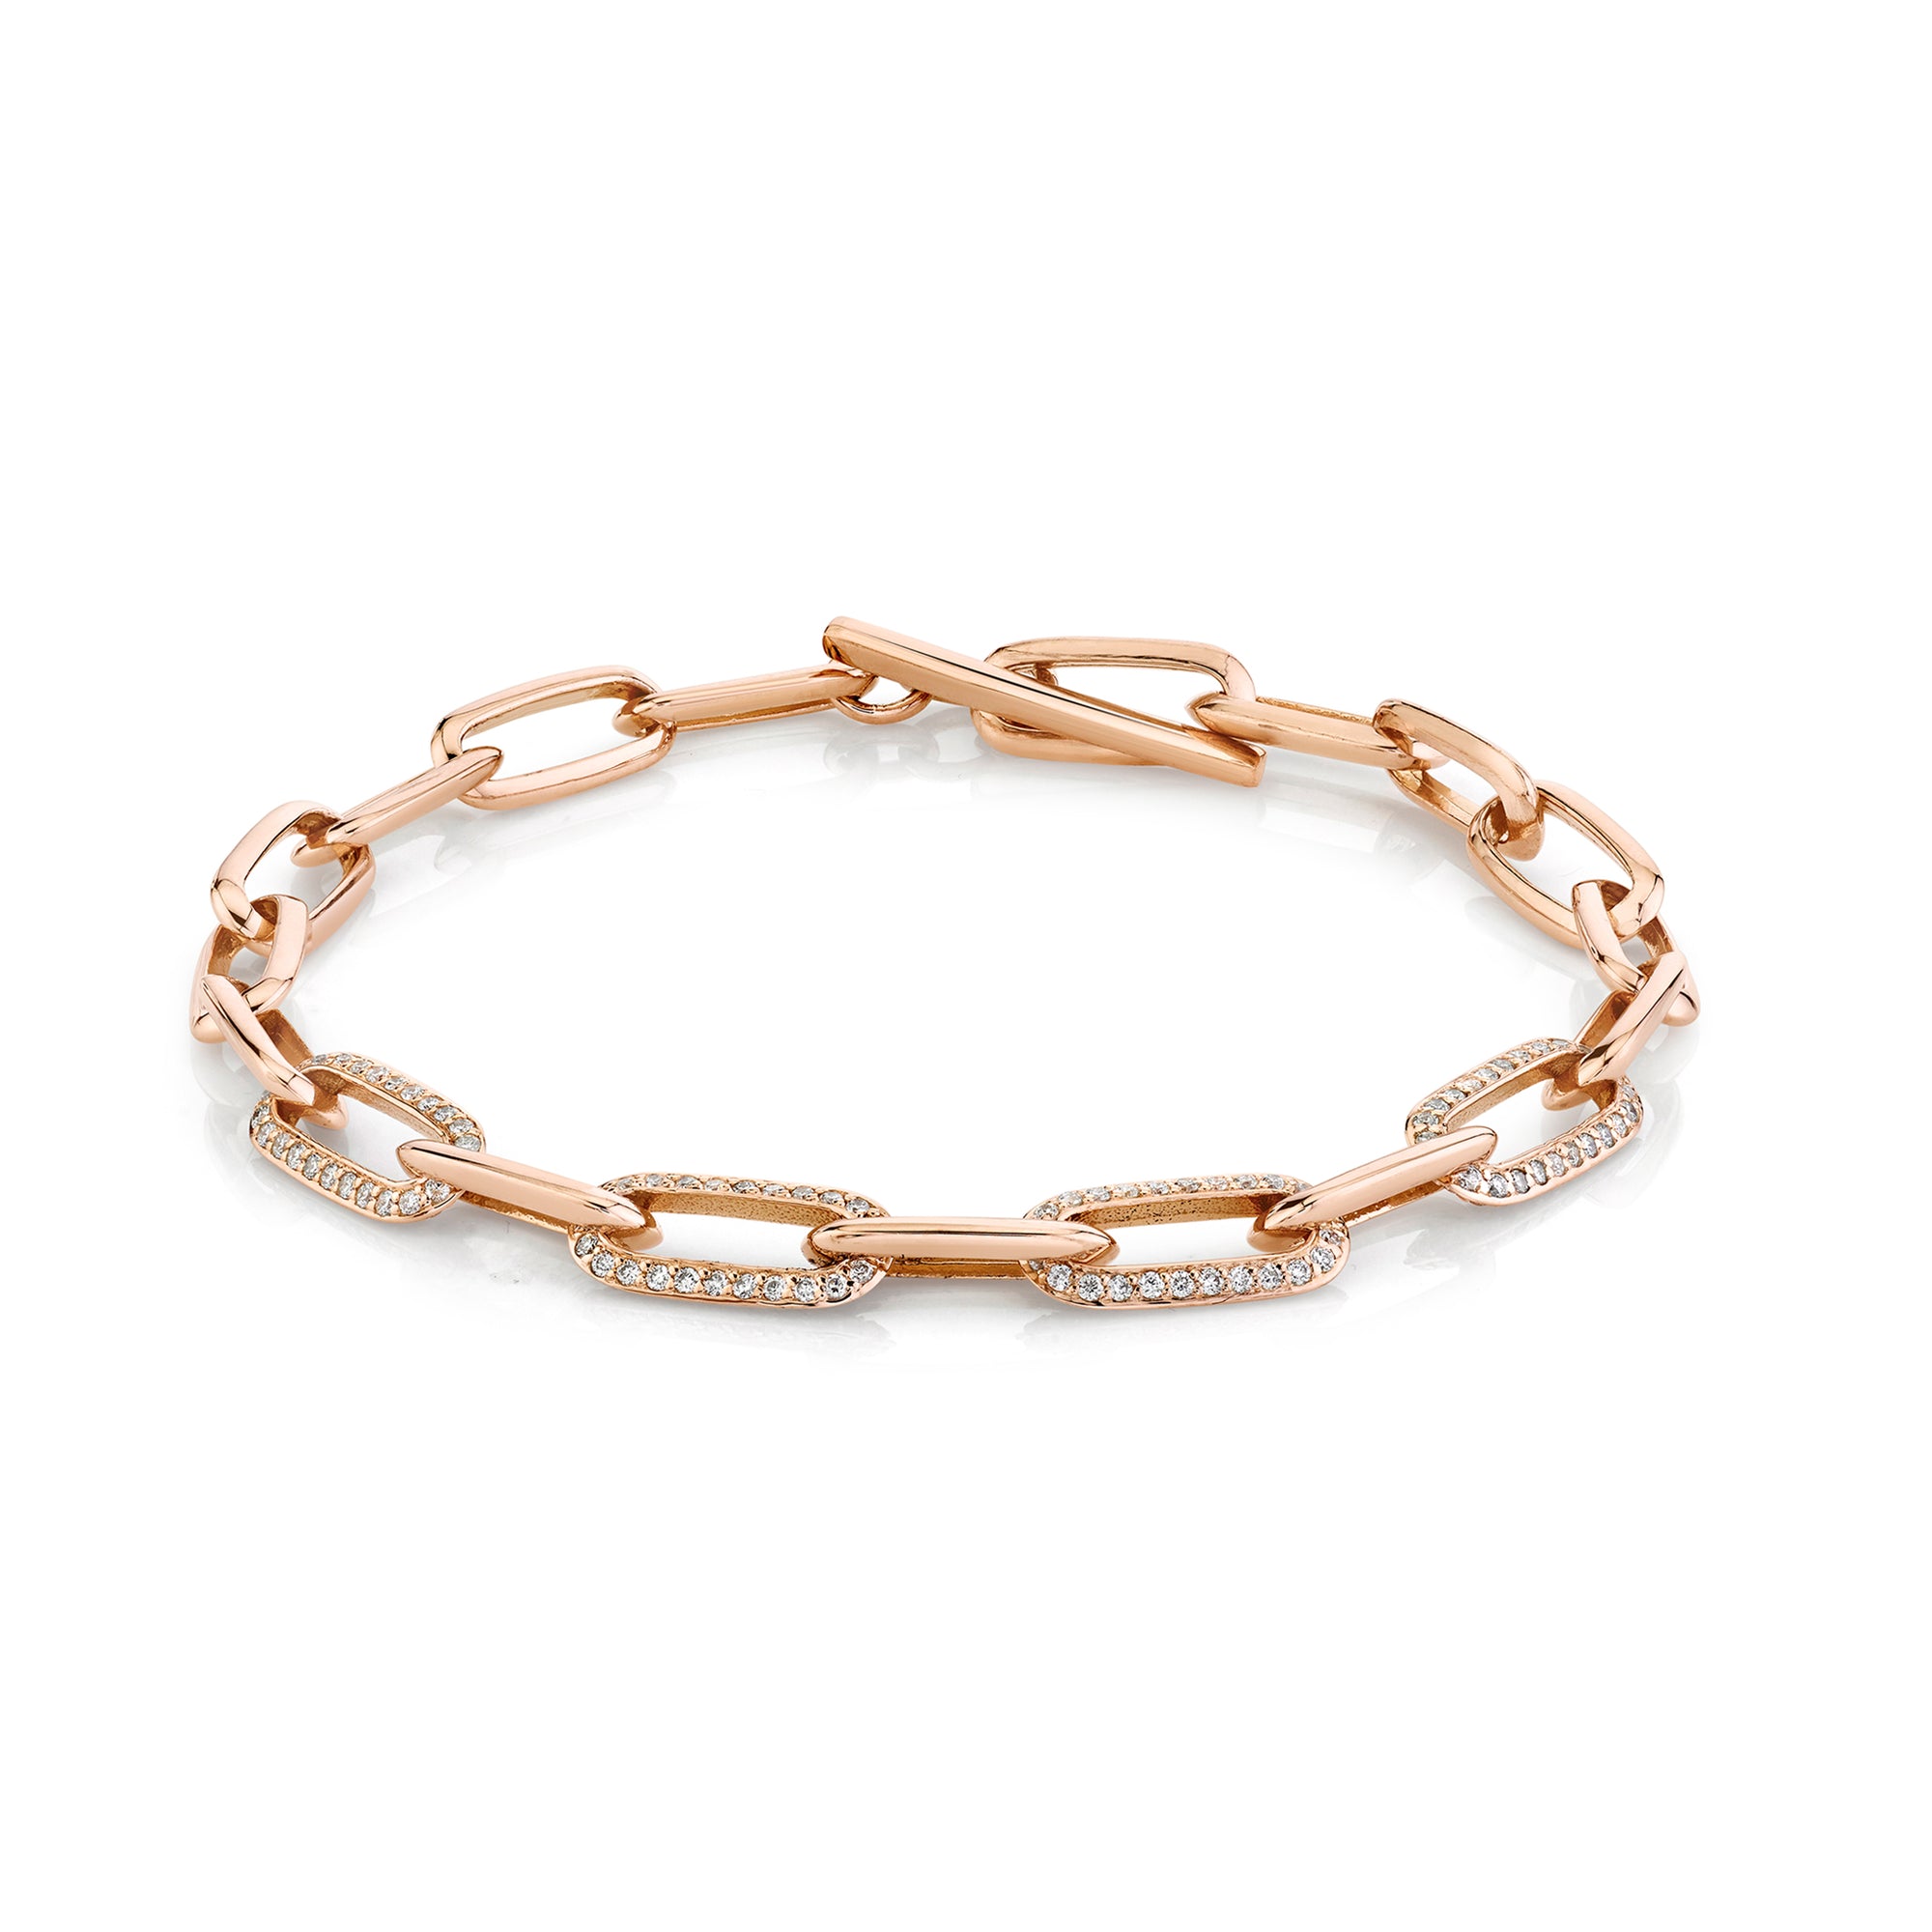 Double Curb Chain Bracelet | Gold link chain, Statement bracelet, Chain